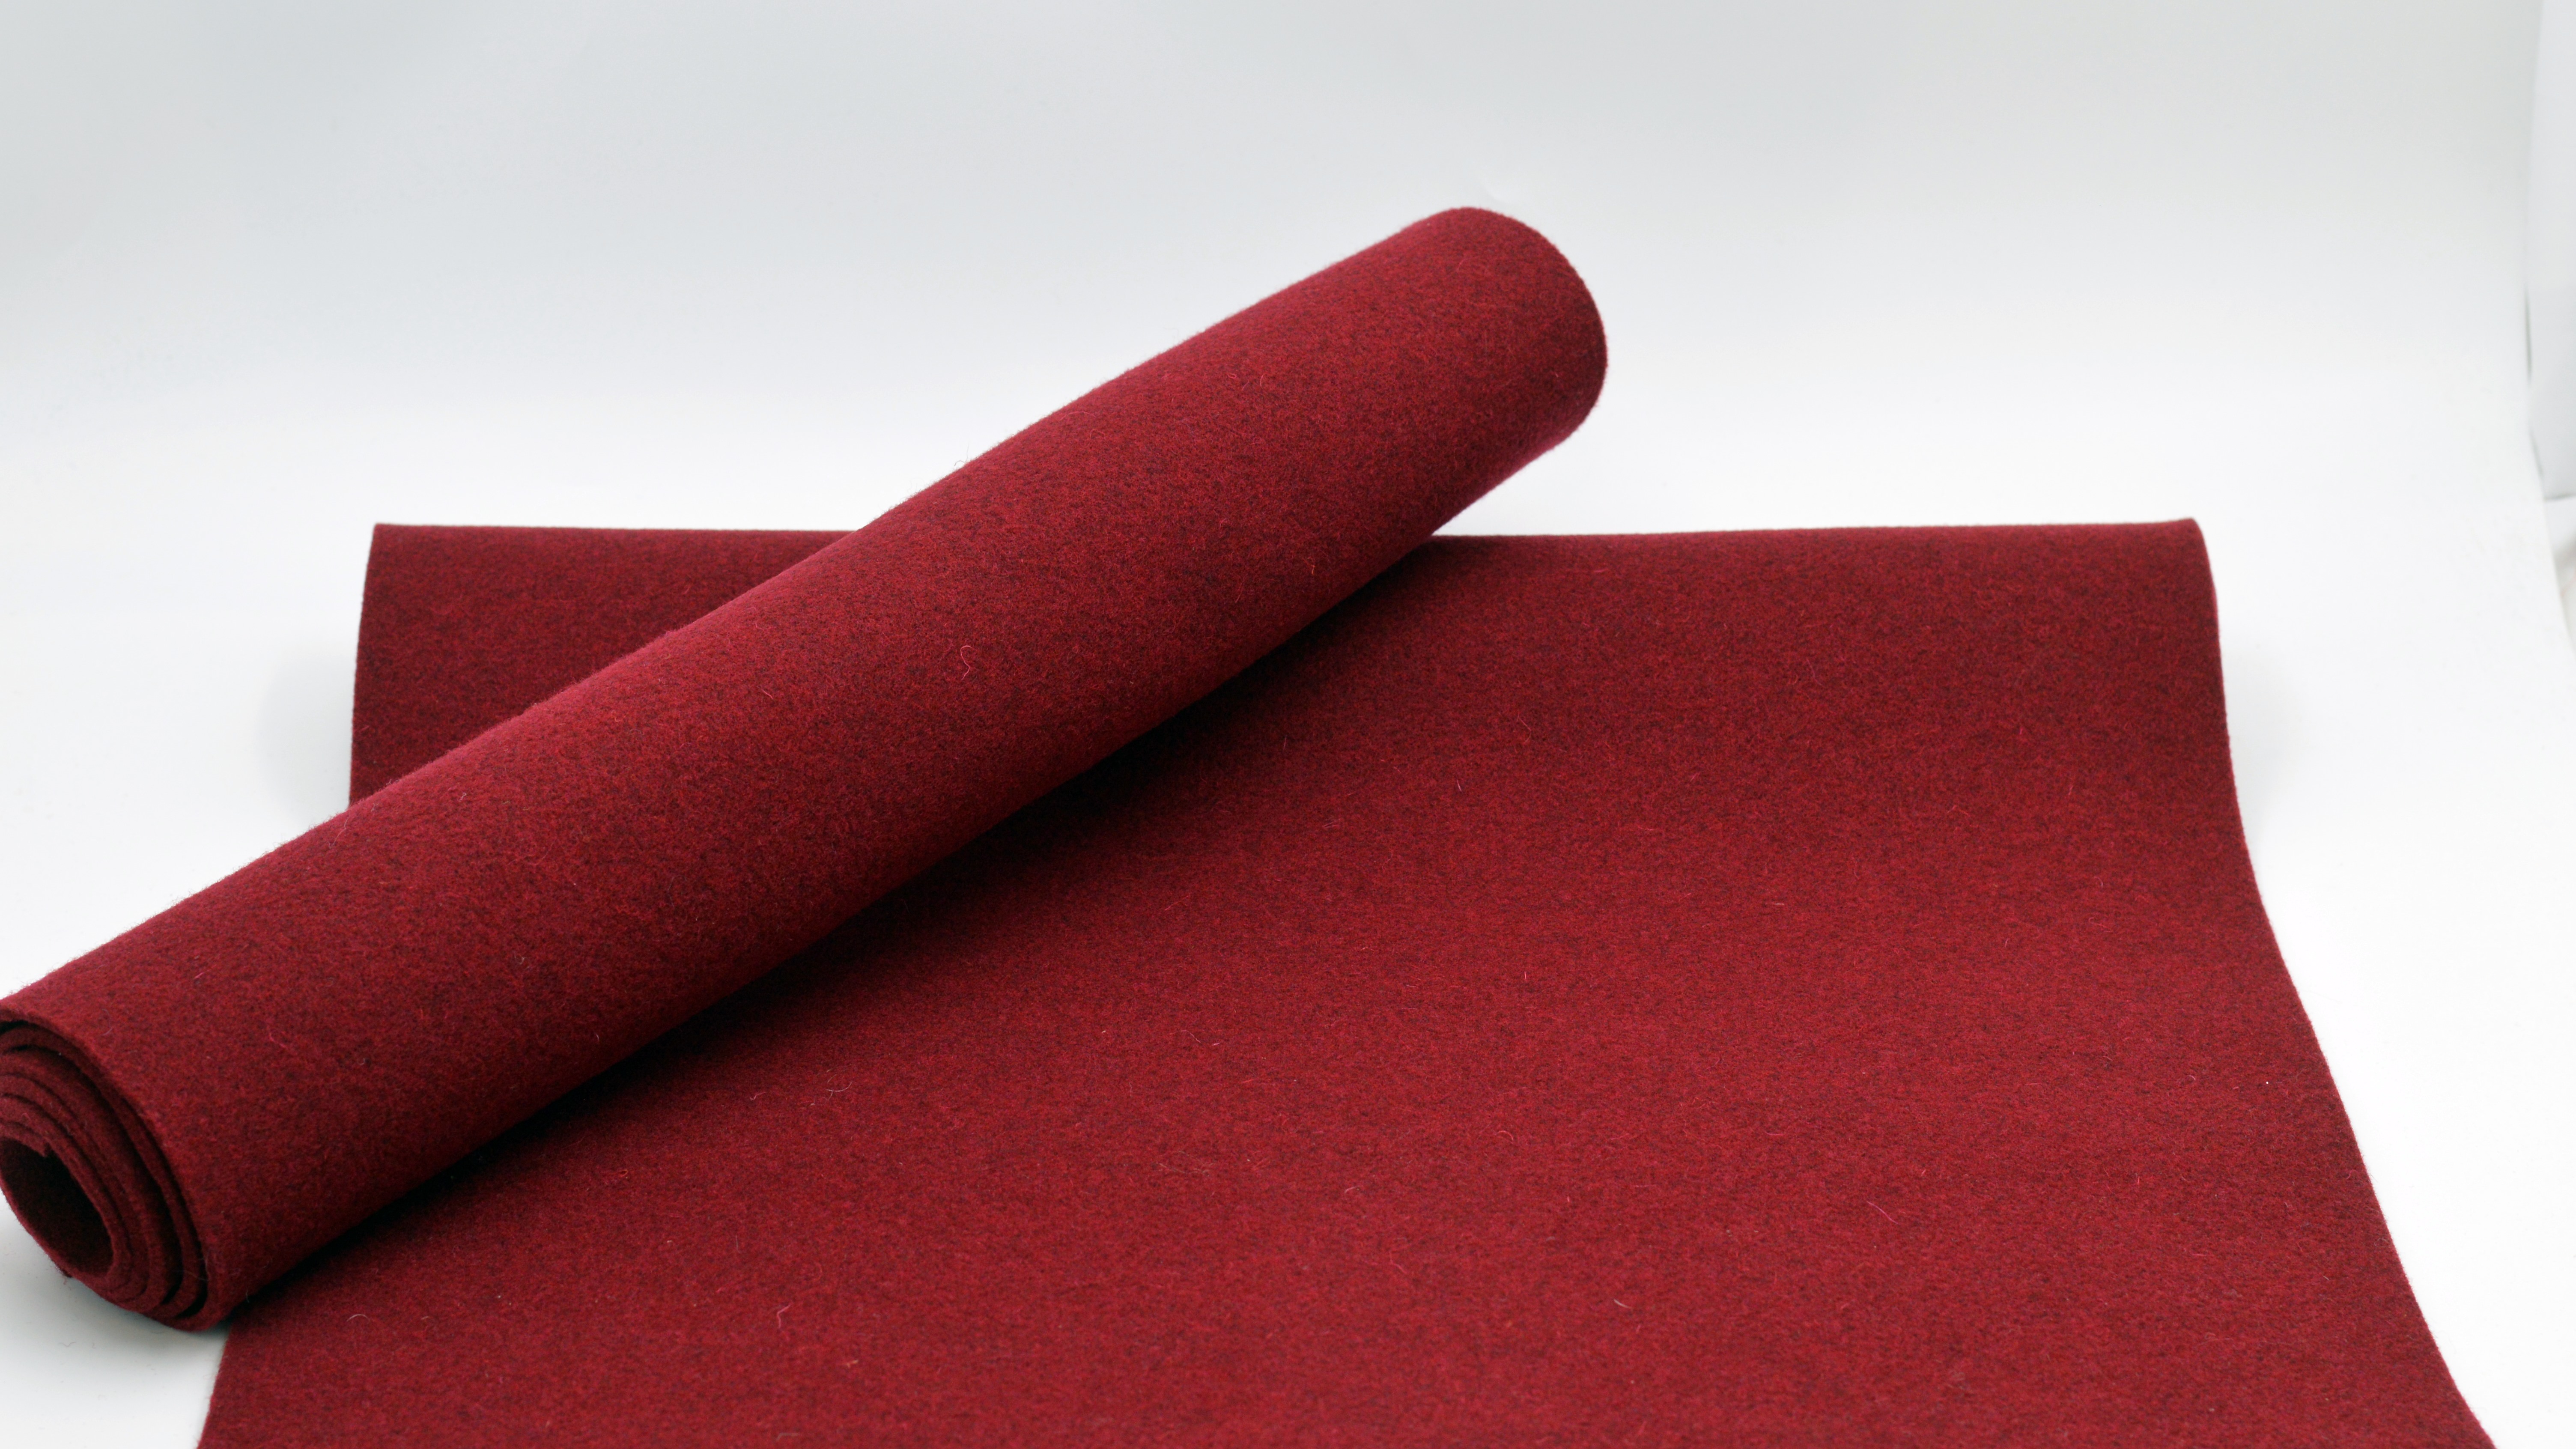 Deco-Line - Tweed Wollfilz meliert - 90 % Schurwolle - 10 % Polyester -  Wollfilz 3mm - 3mm starker Filz